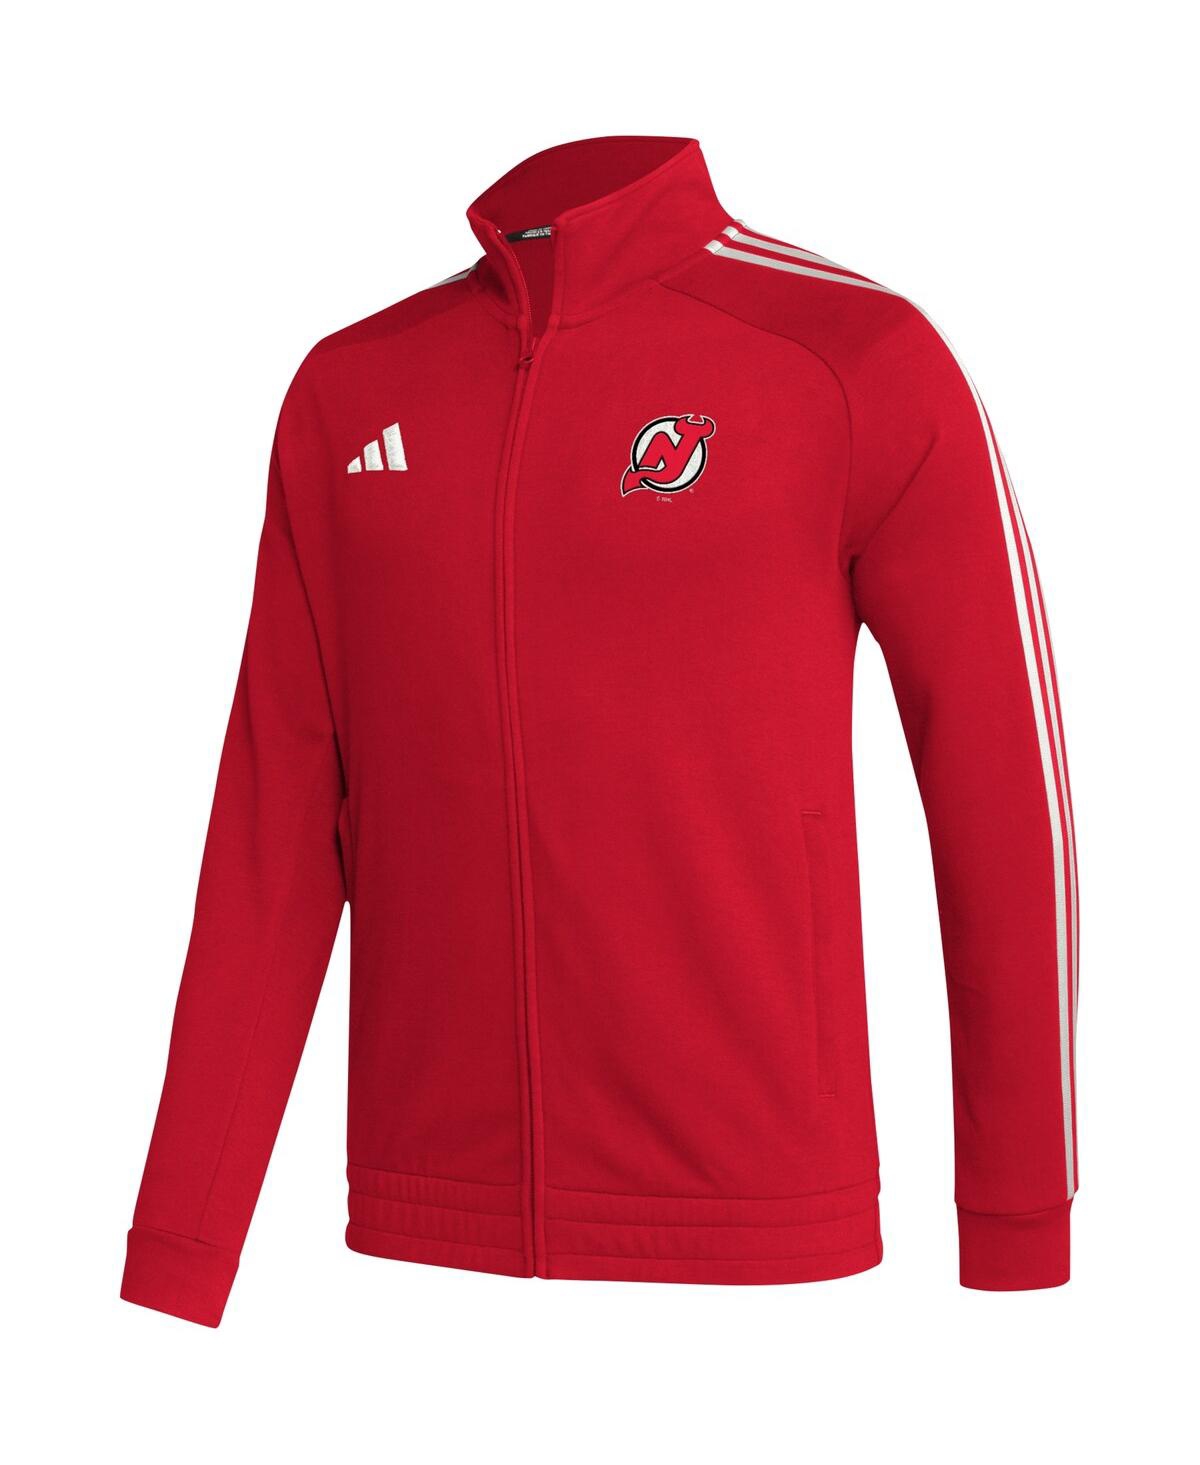 Shop Adidas Originals Men's Adidas Red New Jersey Devils Raglan Full-zip Track Jacket